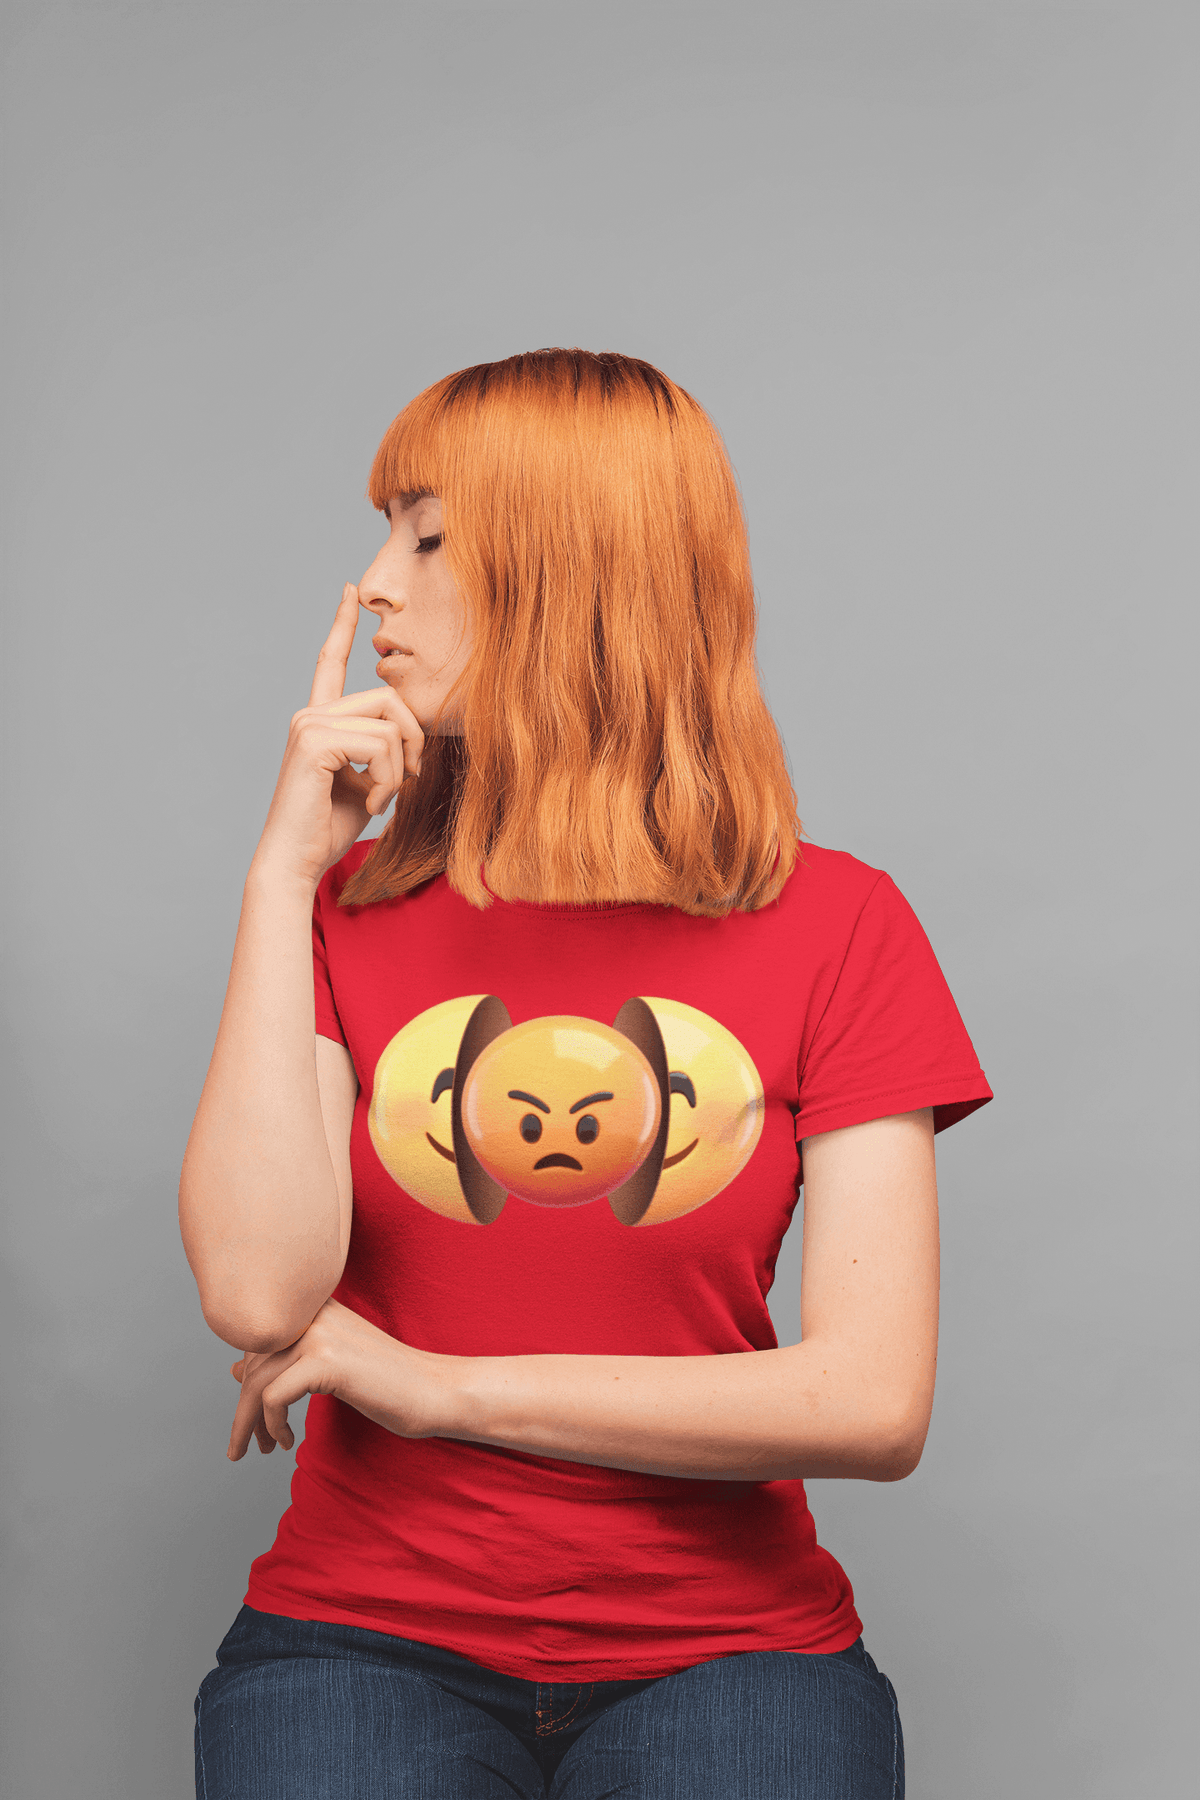 Emoji Happy Outside Angry Inside T-shirt - StylinArt